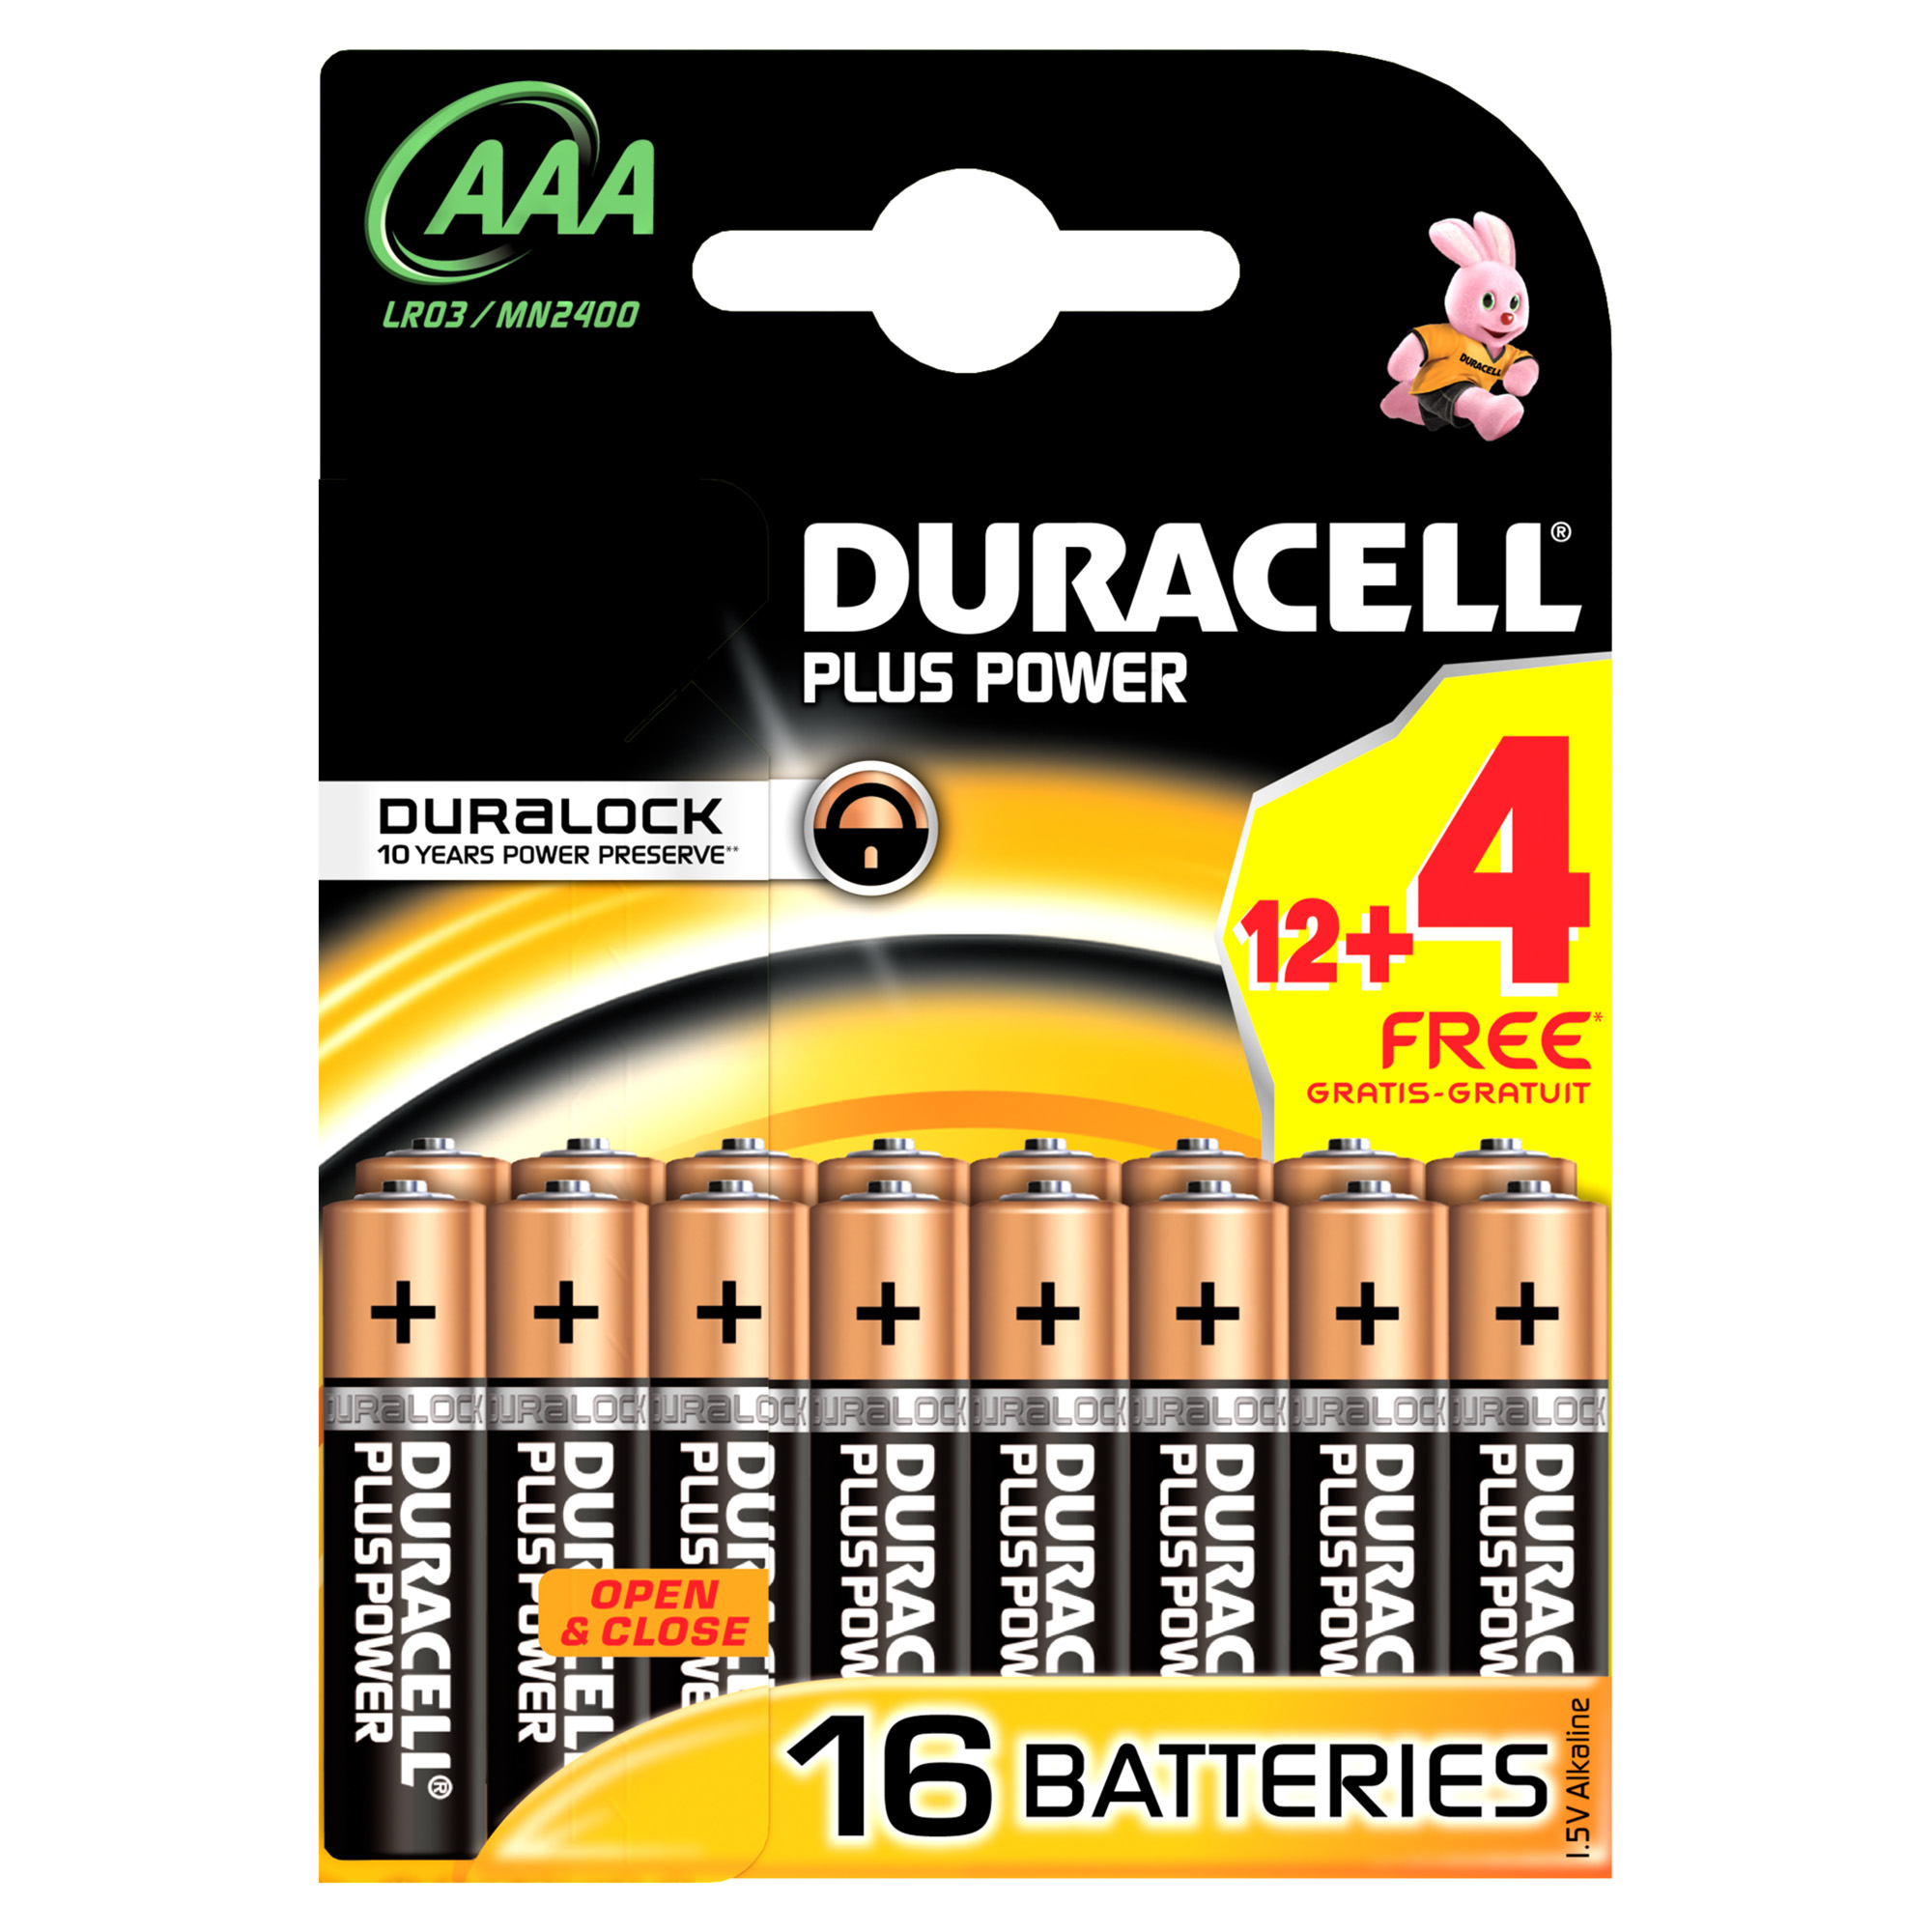 aaa battery